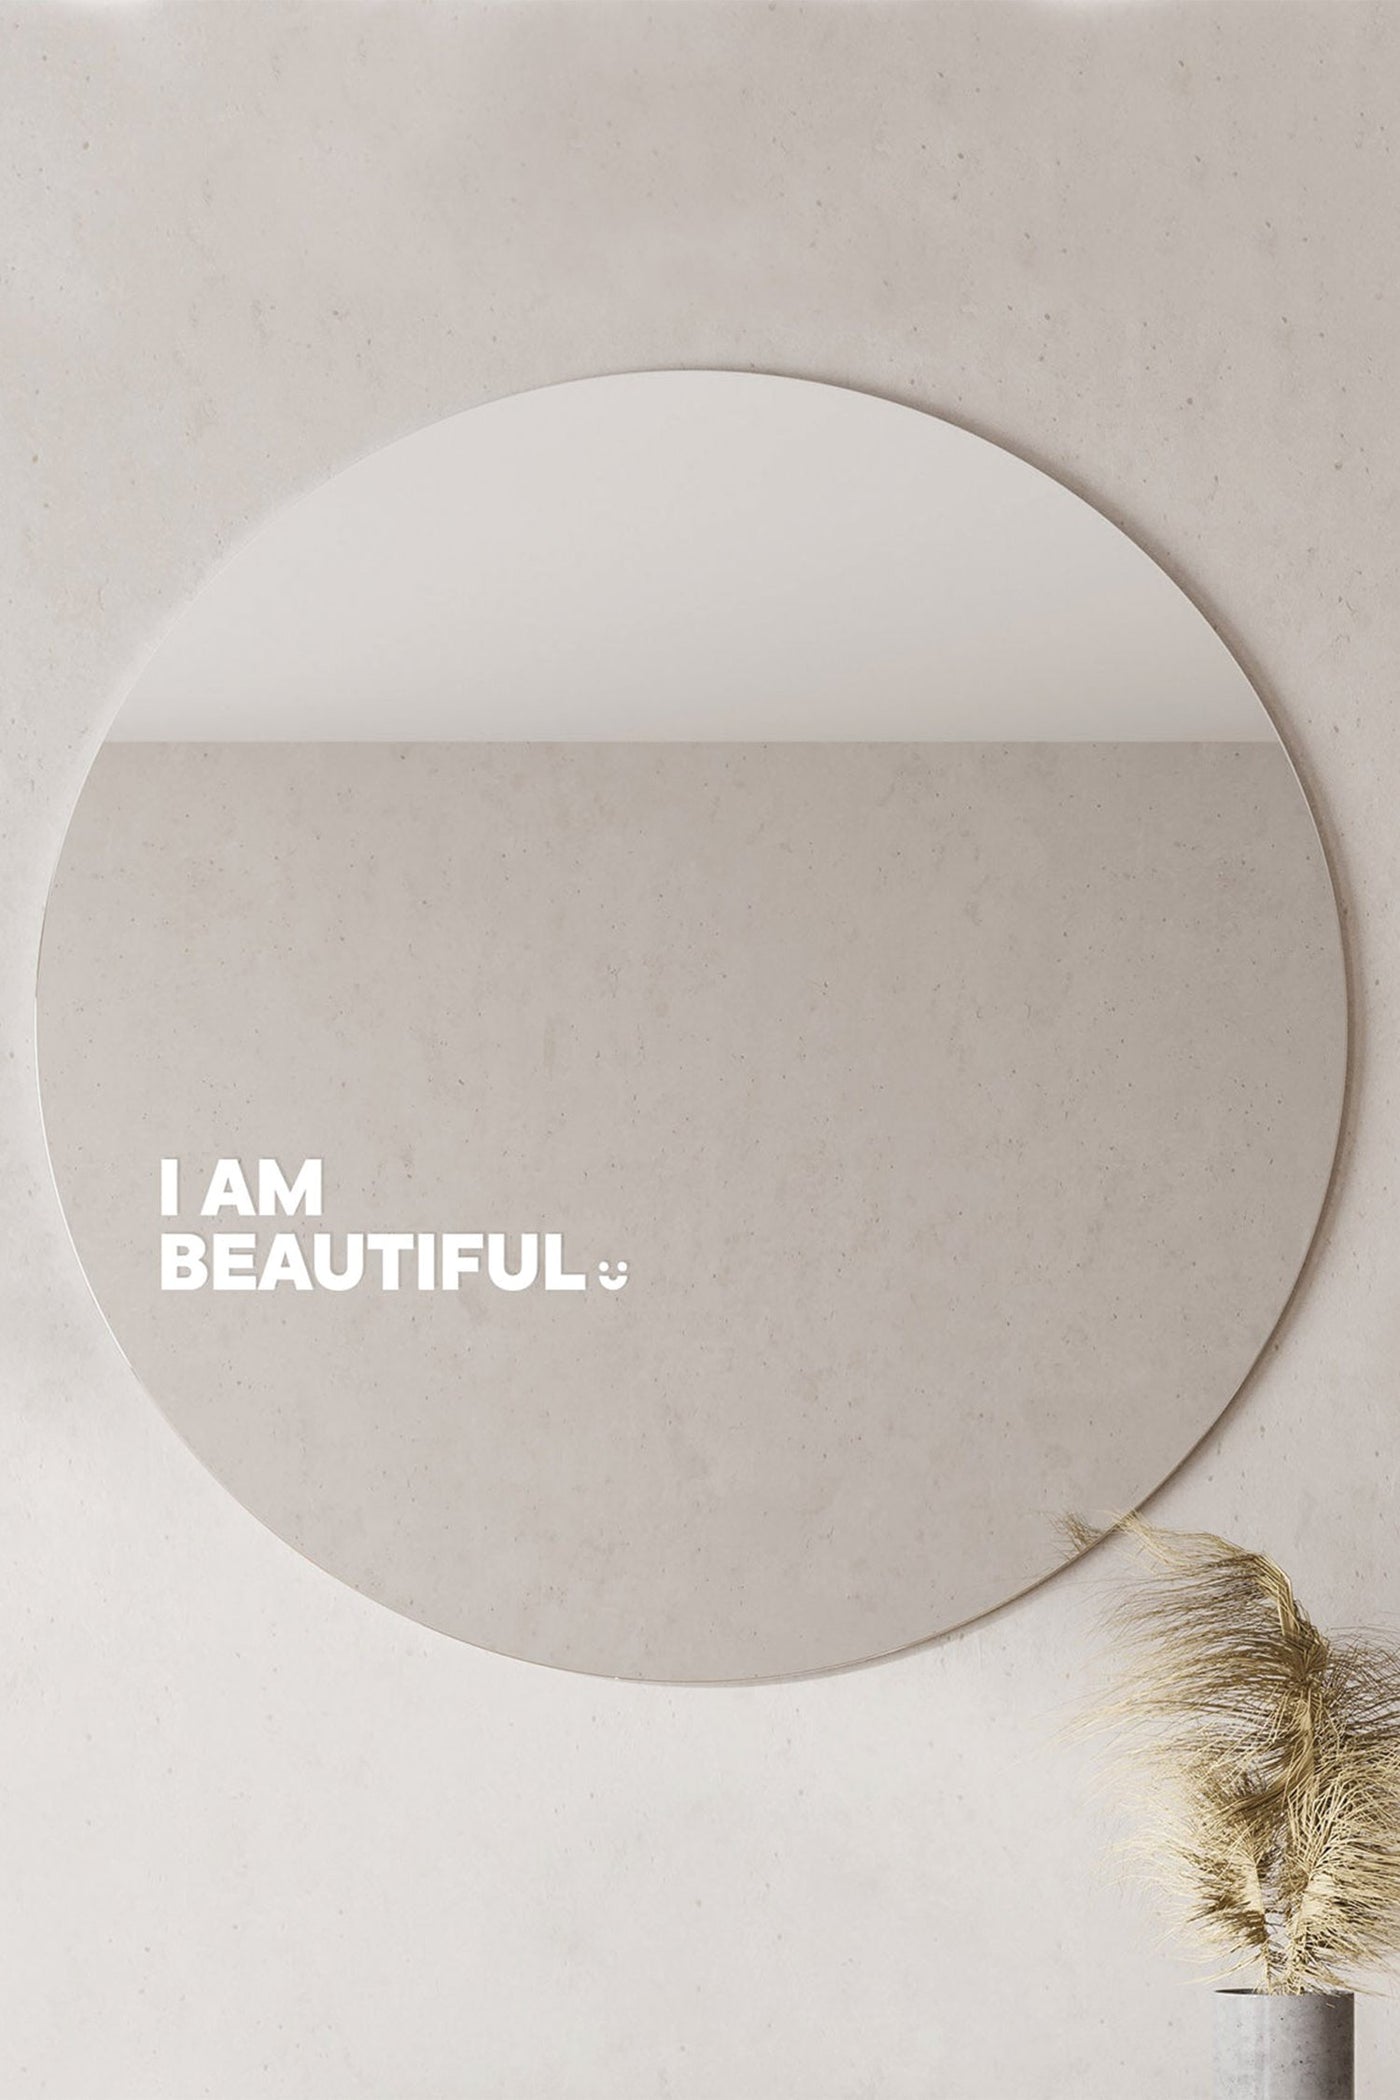 I AM BEAUTIFUL. - Affirmation Mirror Sticker Affirmation Stickers Selfawear 